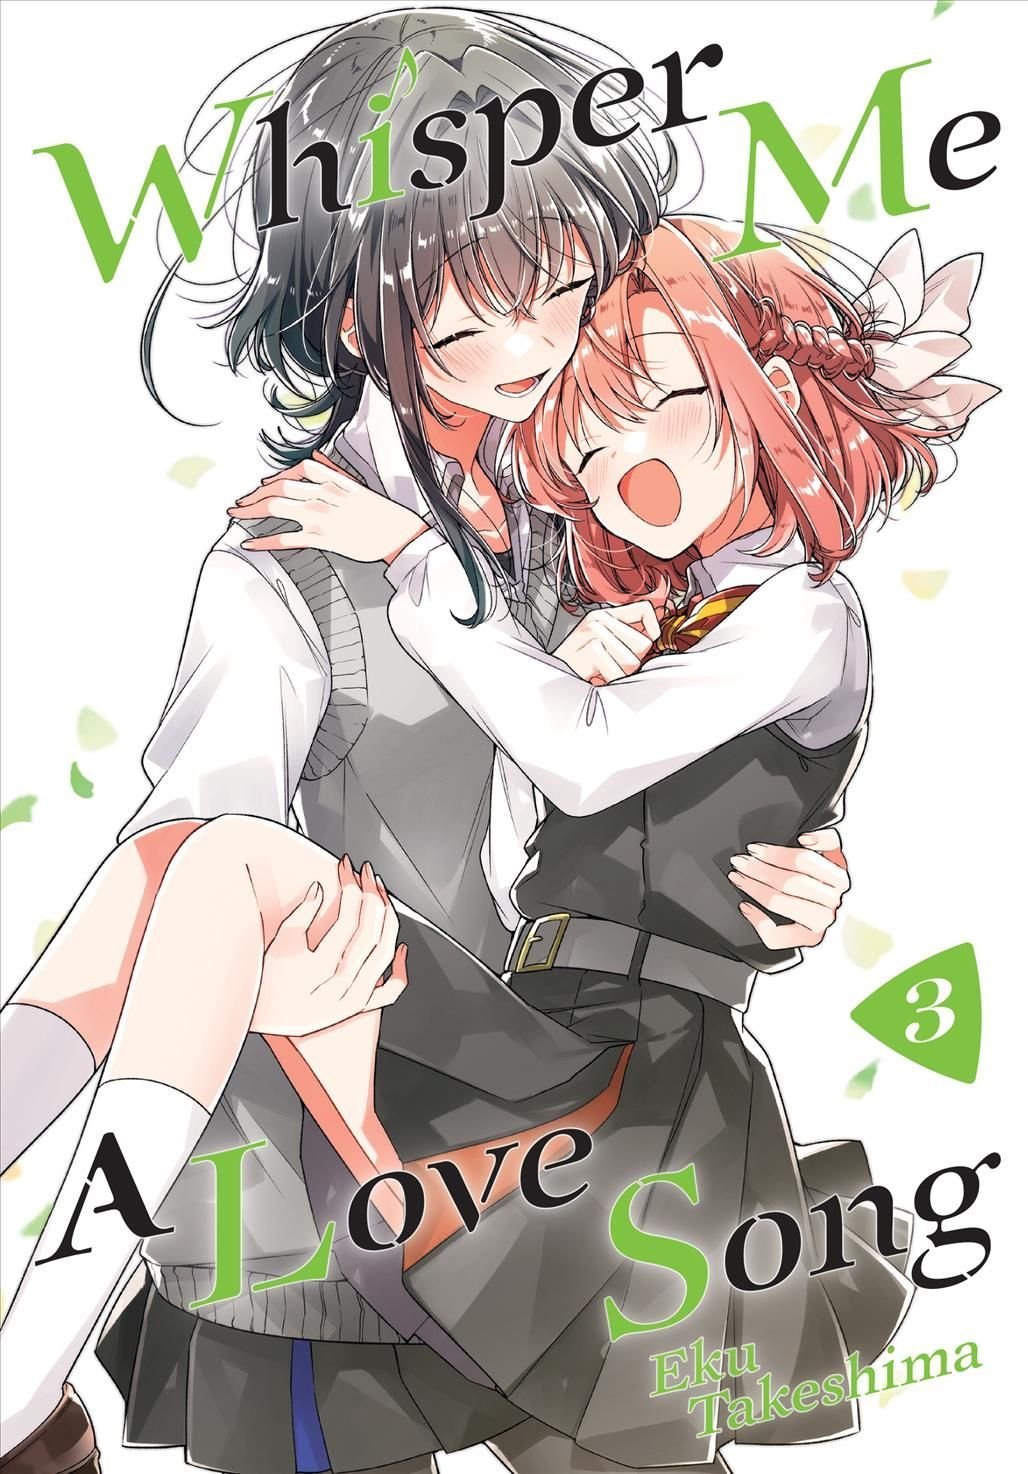 Yuri Manga Whisper Me a Love Song Gets TV Anime Adaptation - Crunchyroll  News